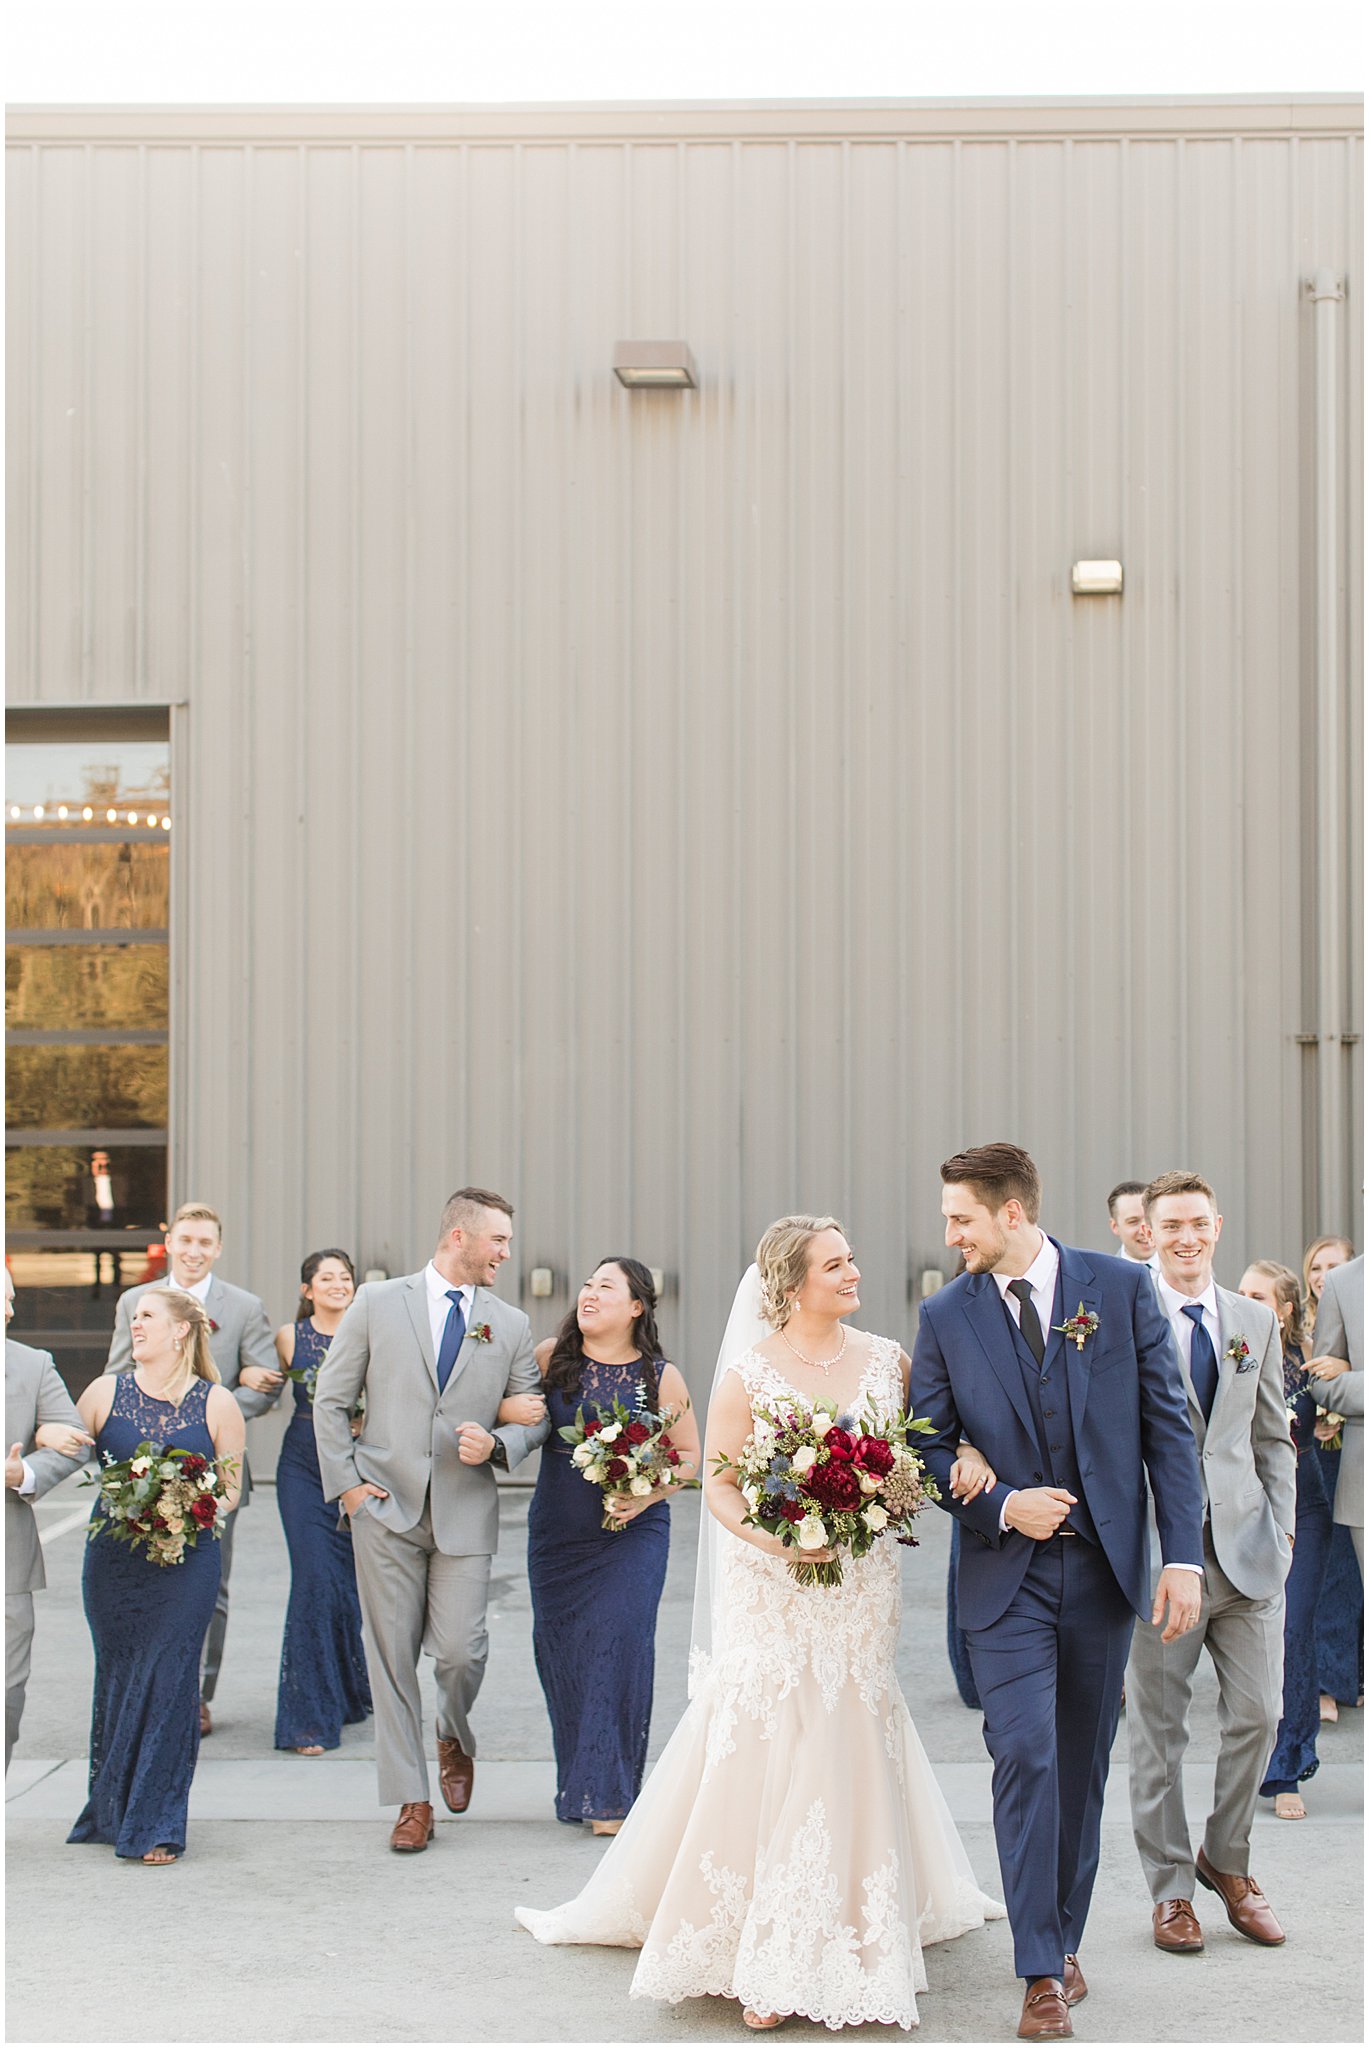 Sycamore Creek Vineyards Wedding - Live Love Leal - Fall Wedding - Bay Area Wedding Photographer - Angela Sue Photography_0051.jpg